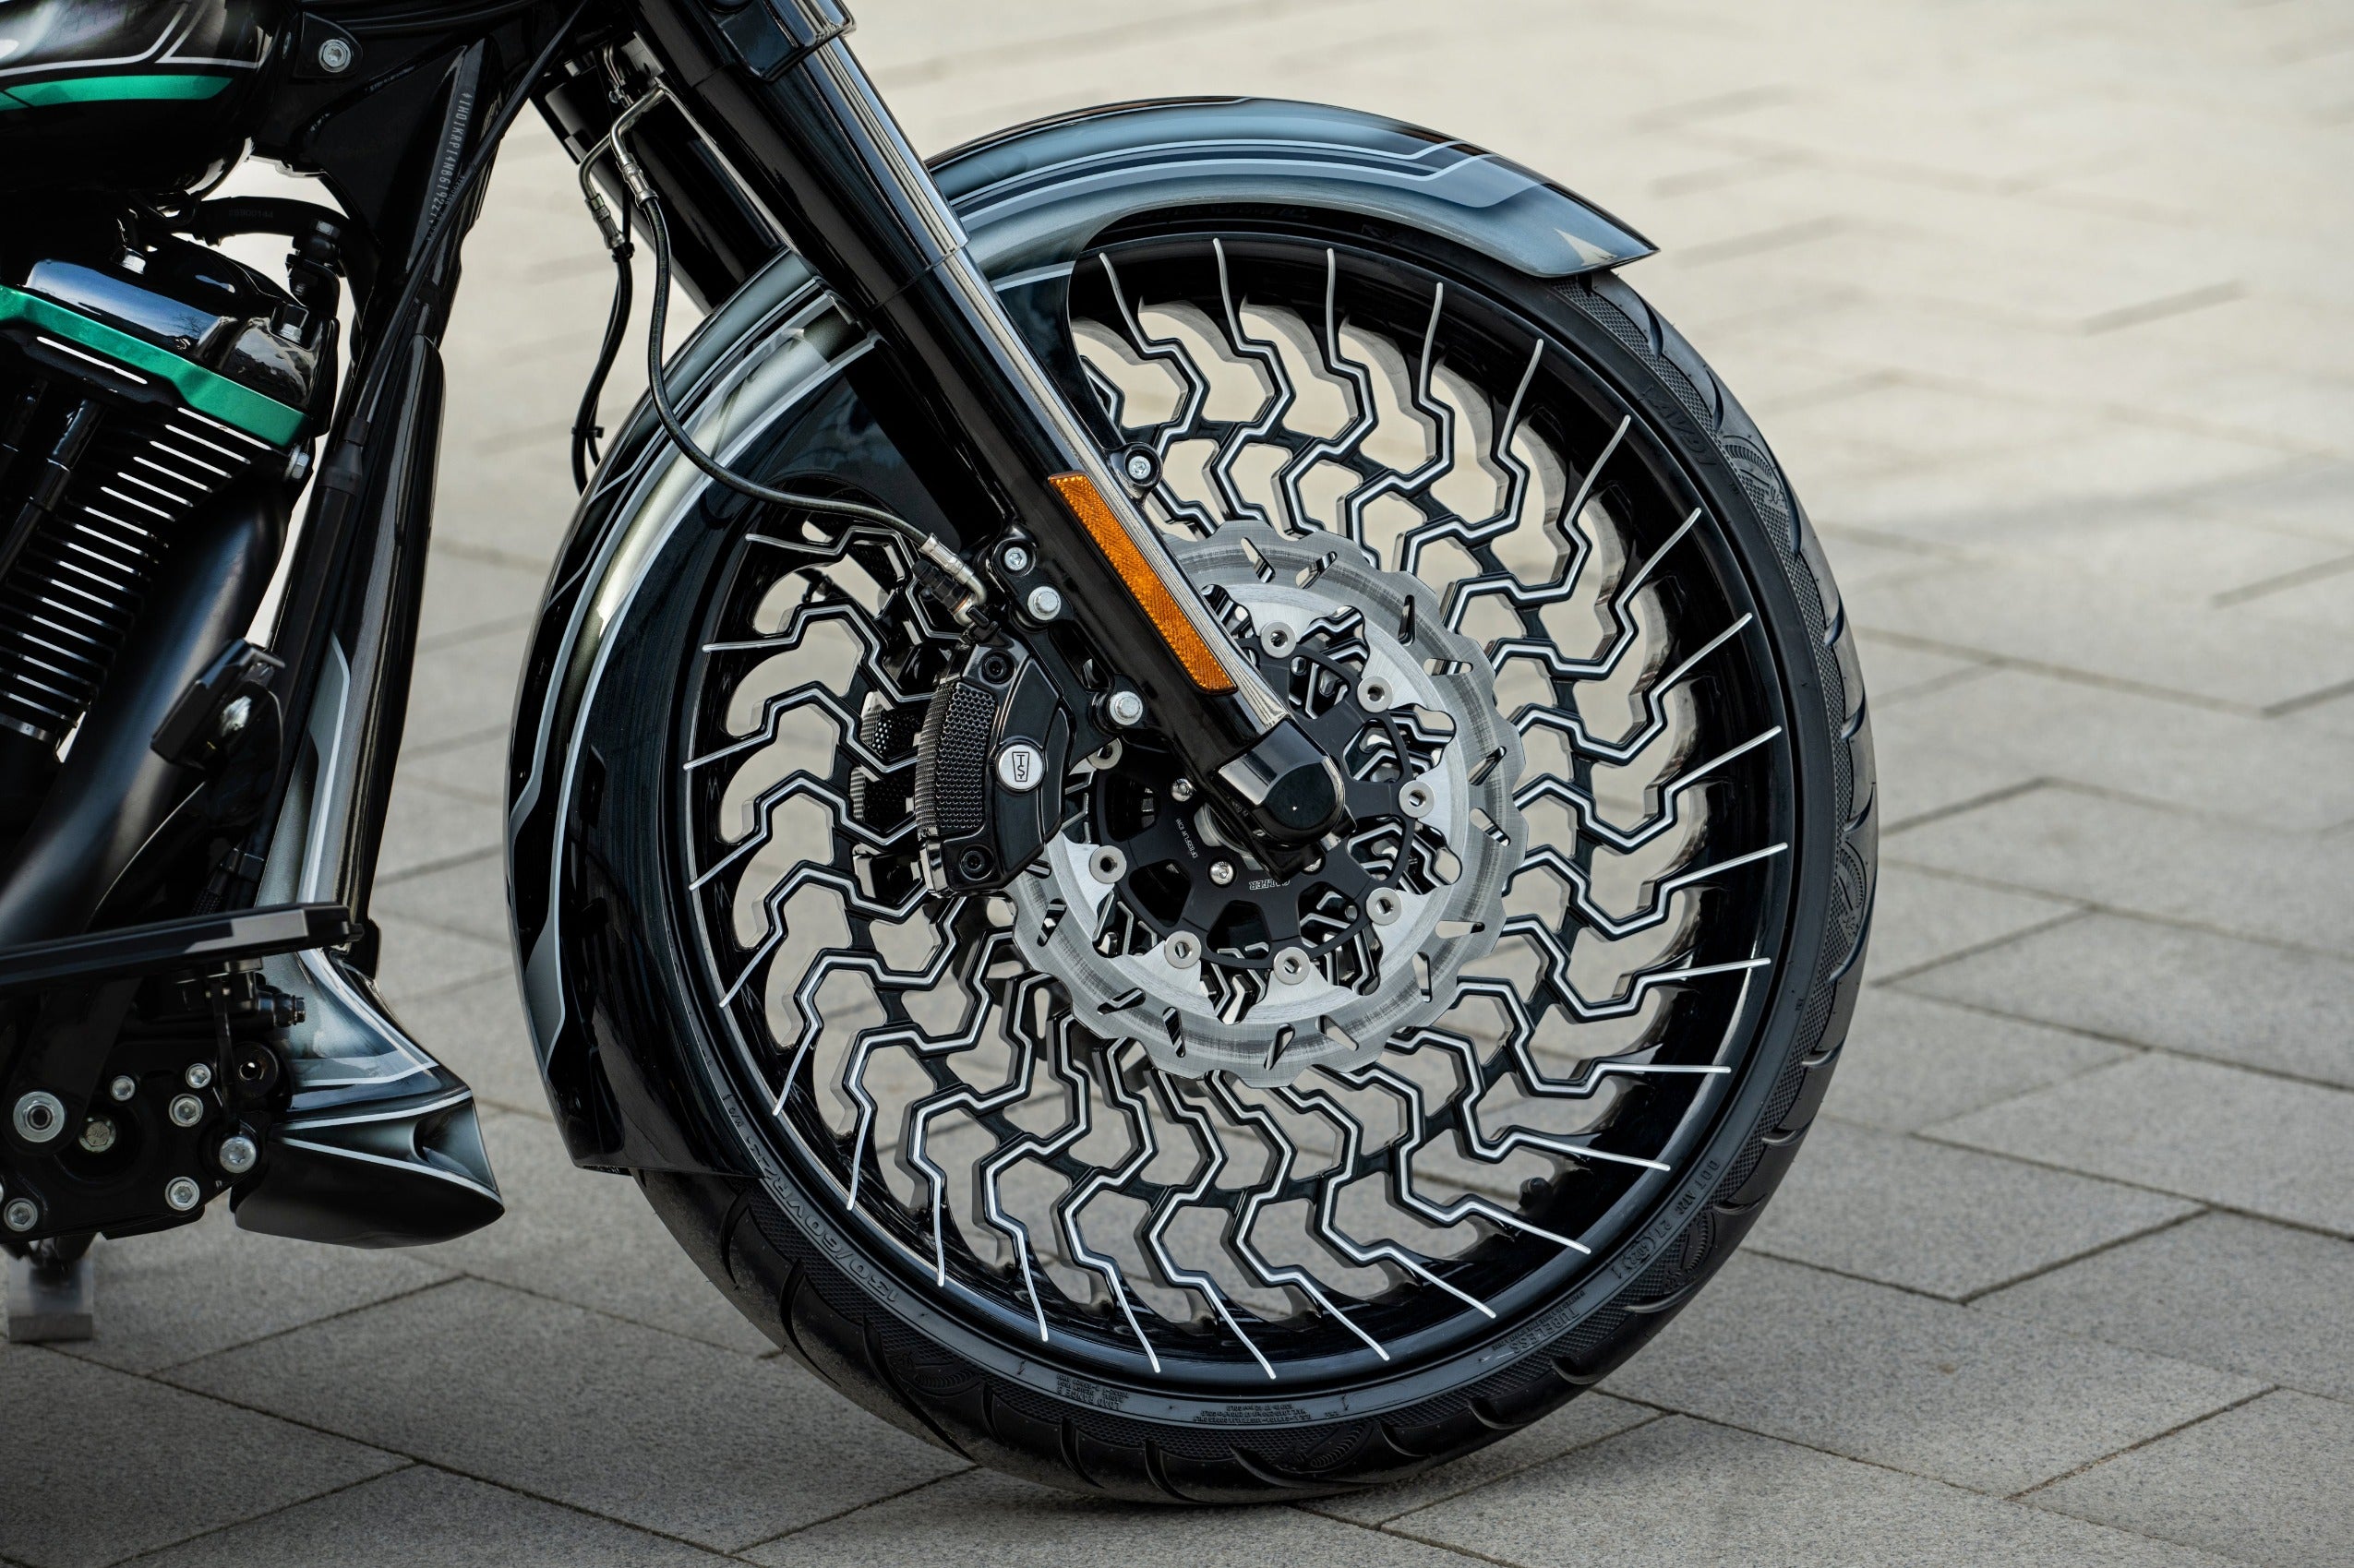 Vortex custom 23" wheel on motorcycle close up